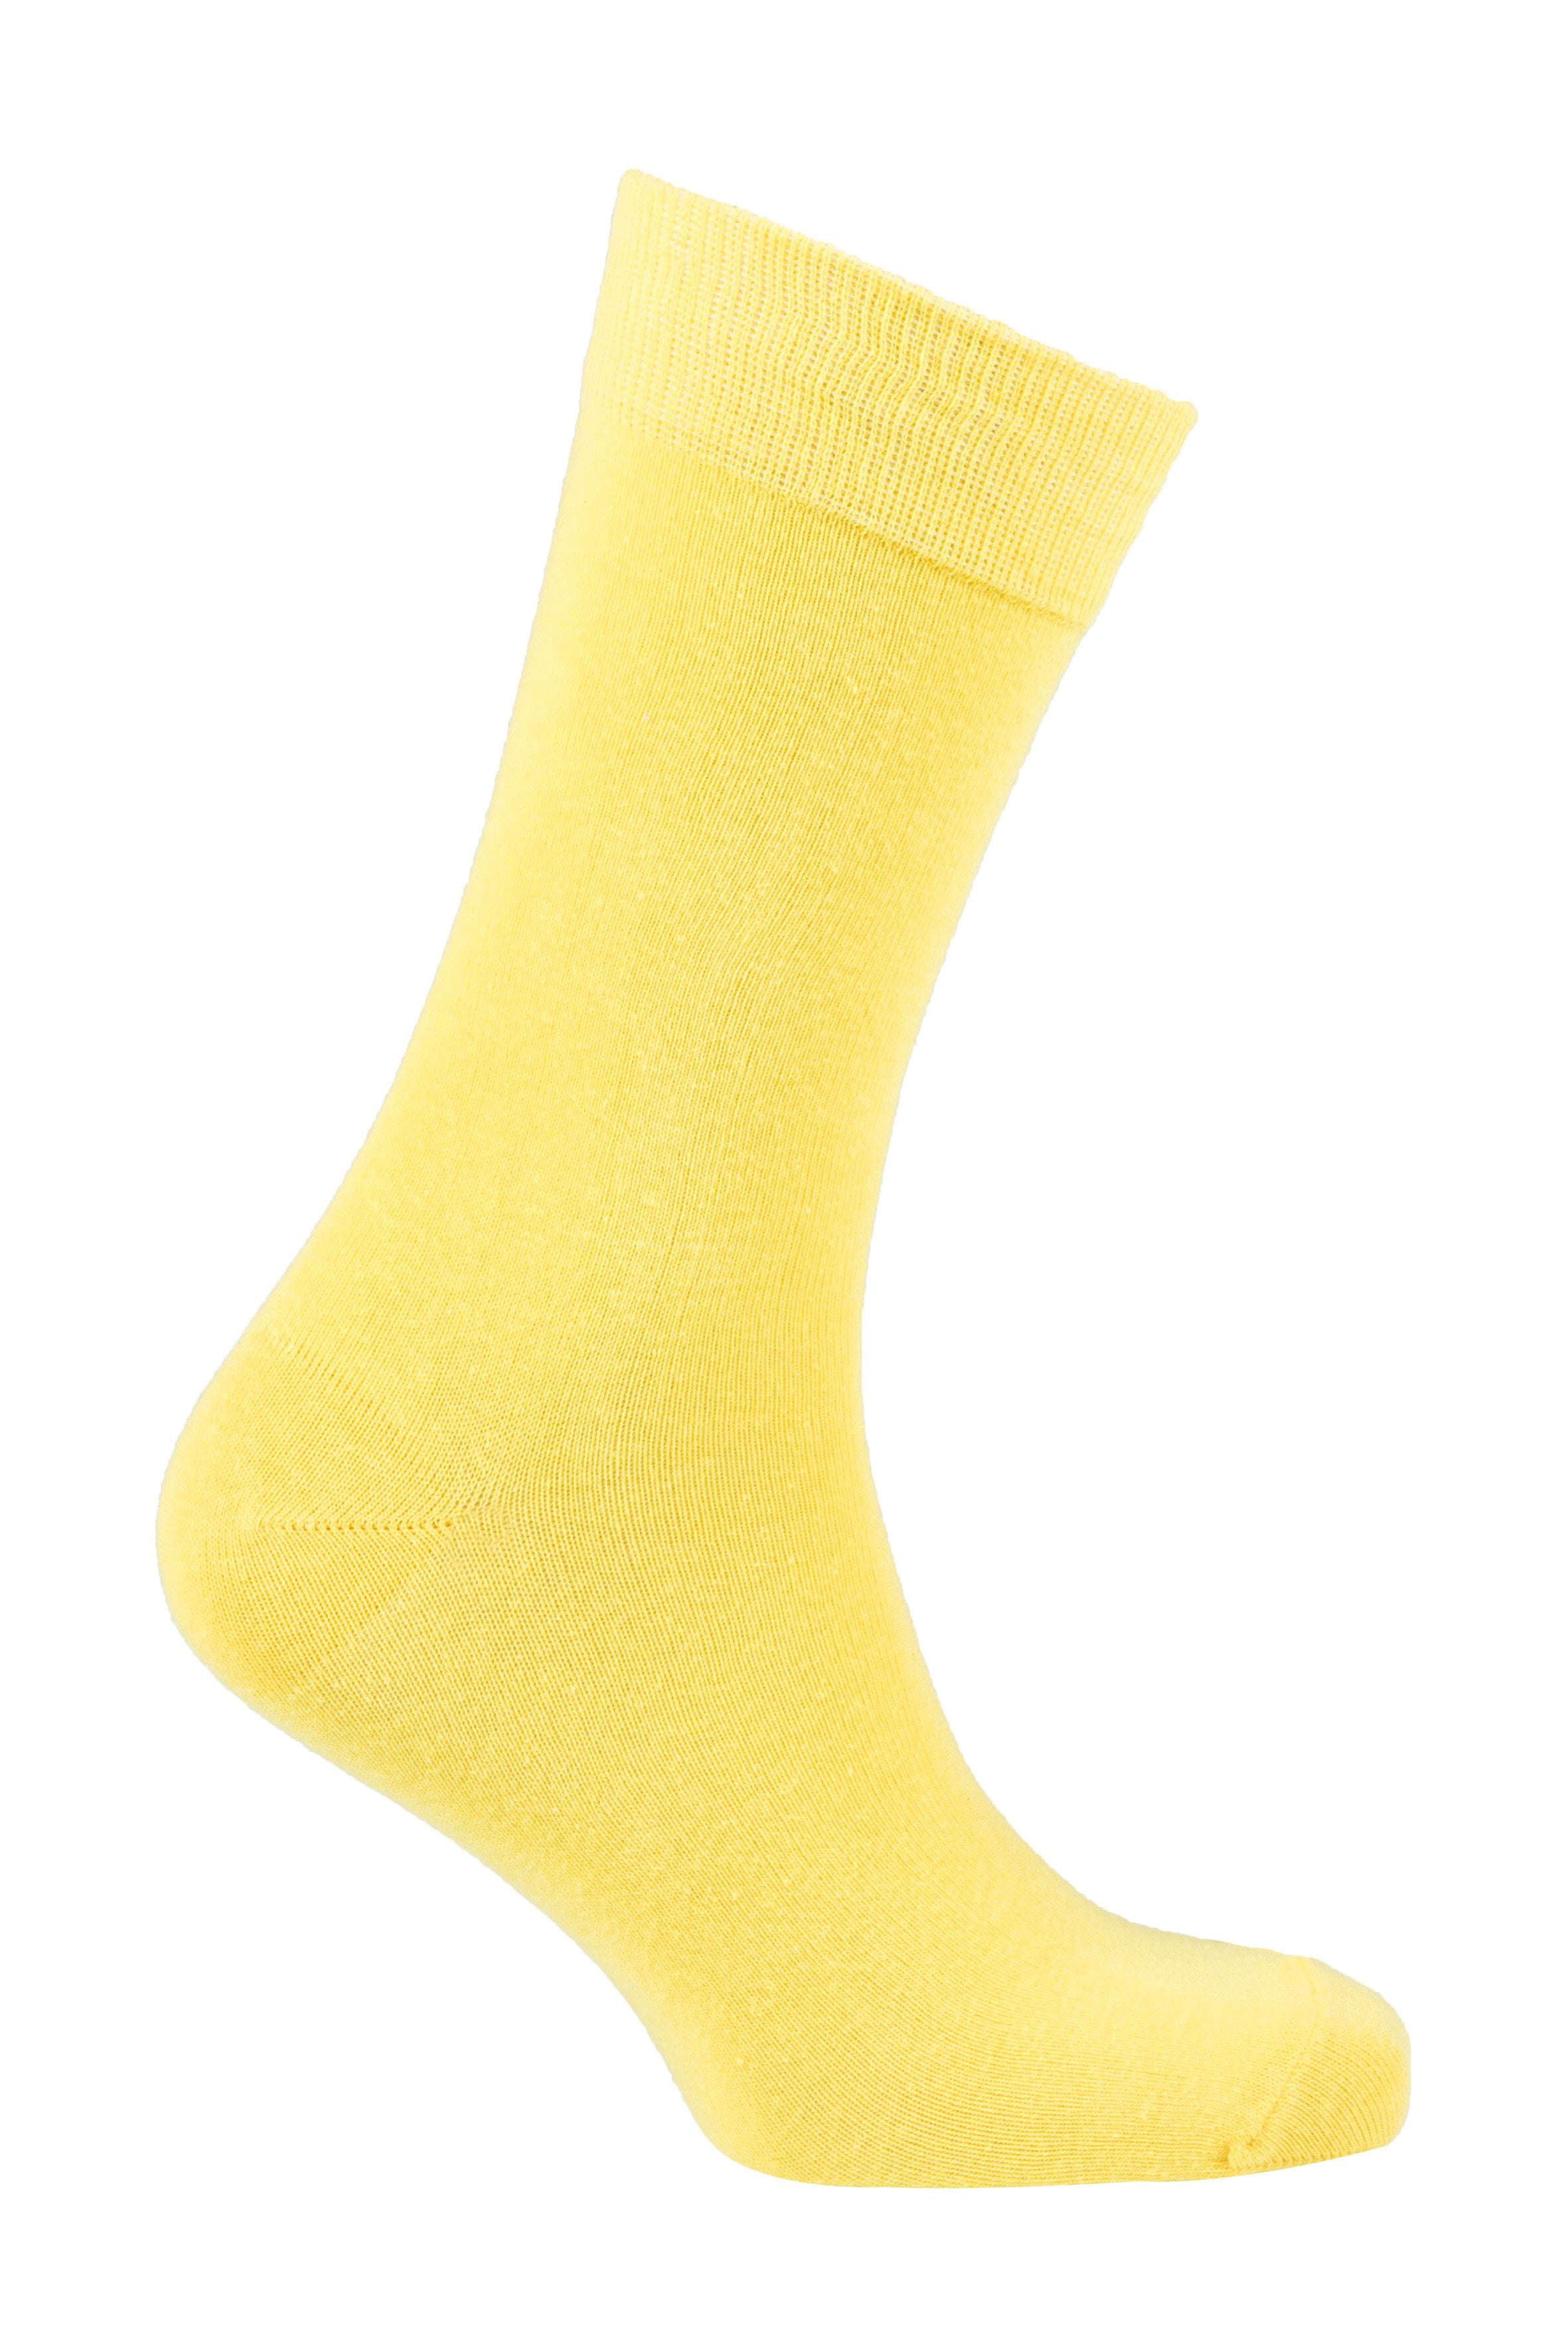 Solid Yellow Socks - Walmart.com